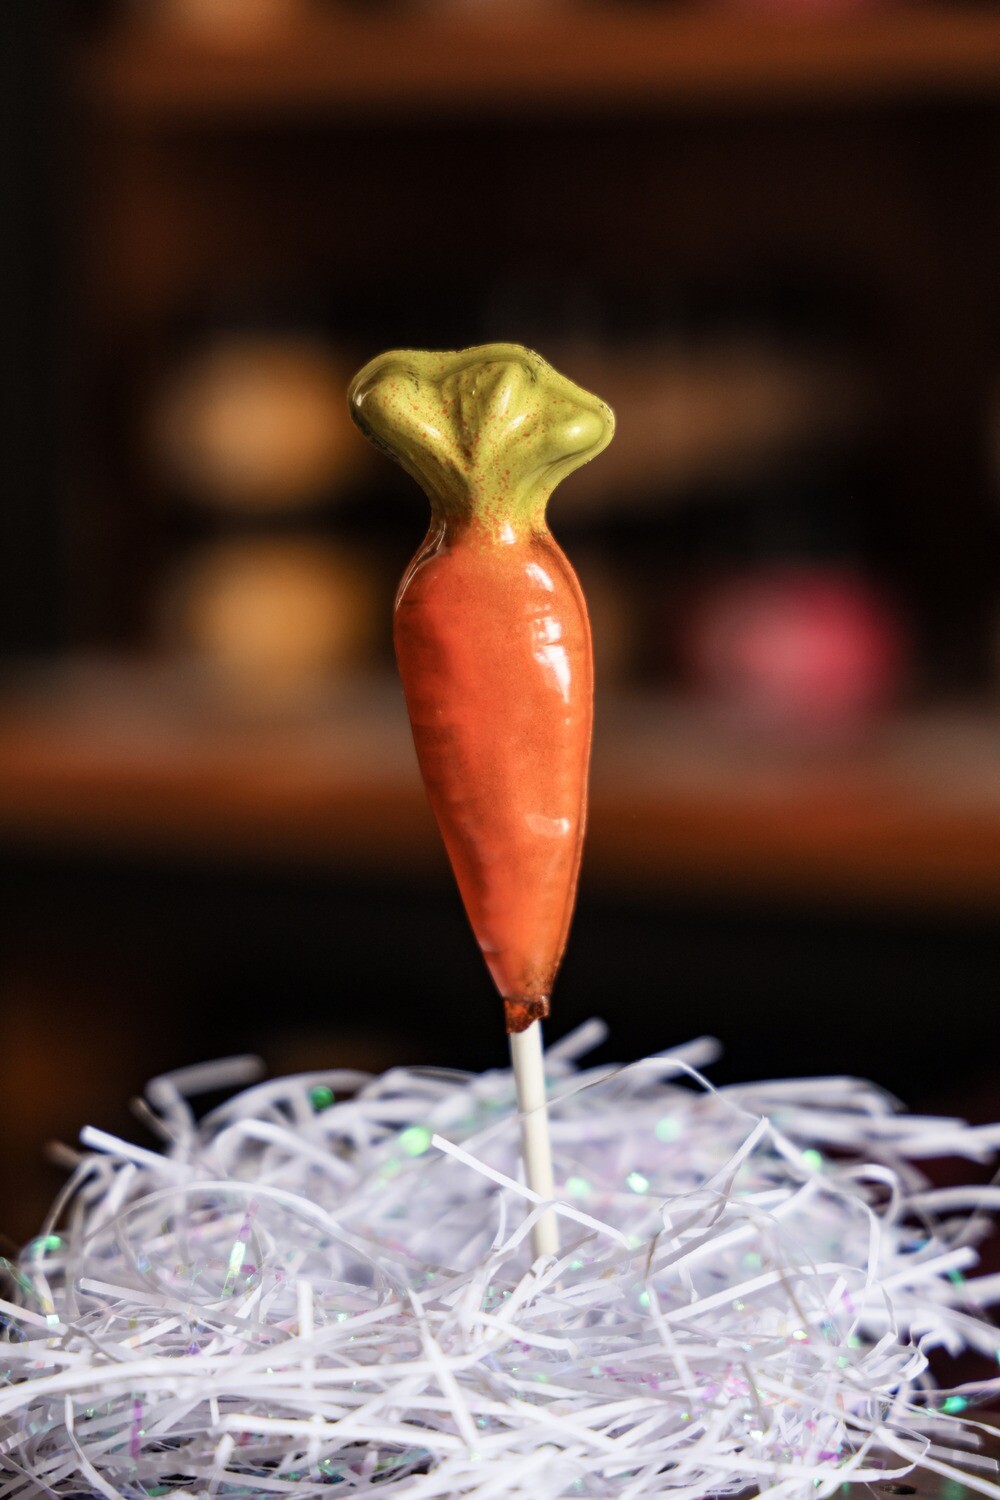 Suçon carotte (petite) - L